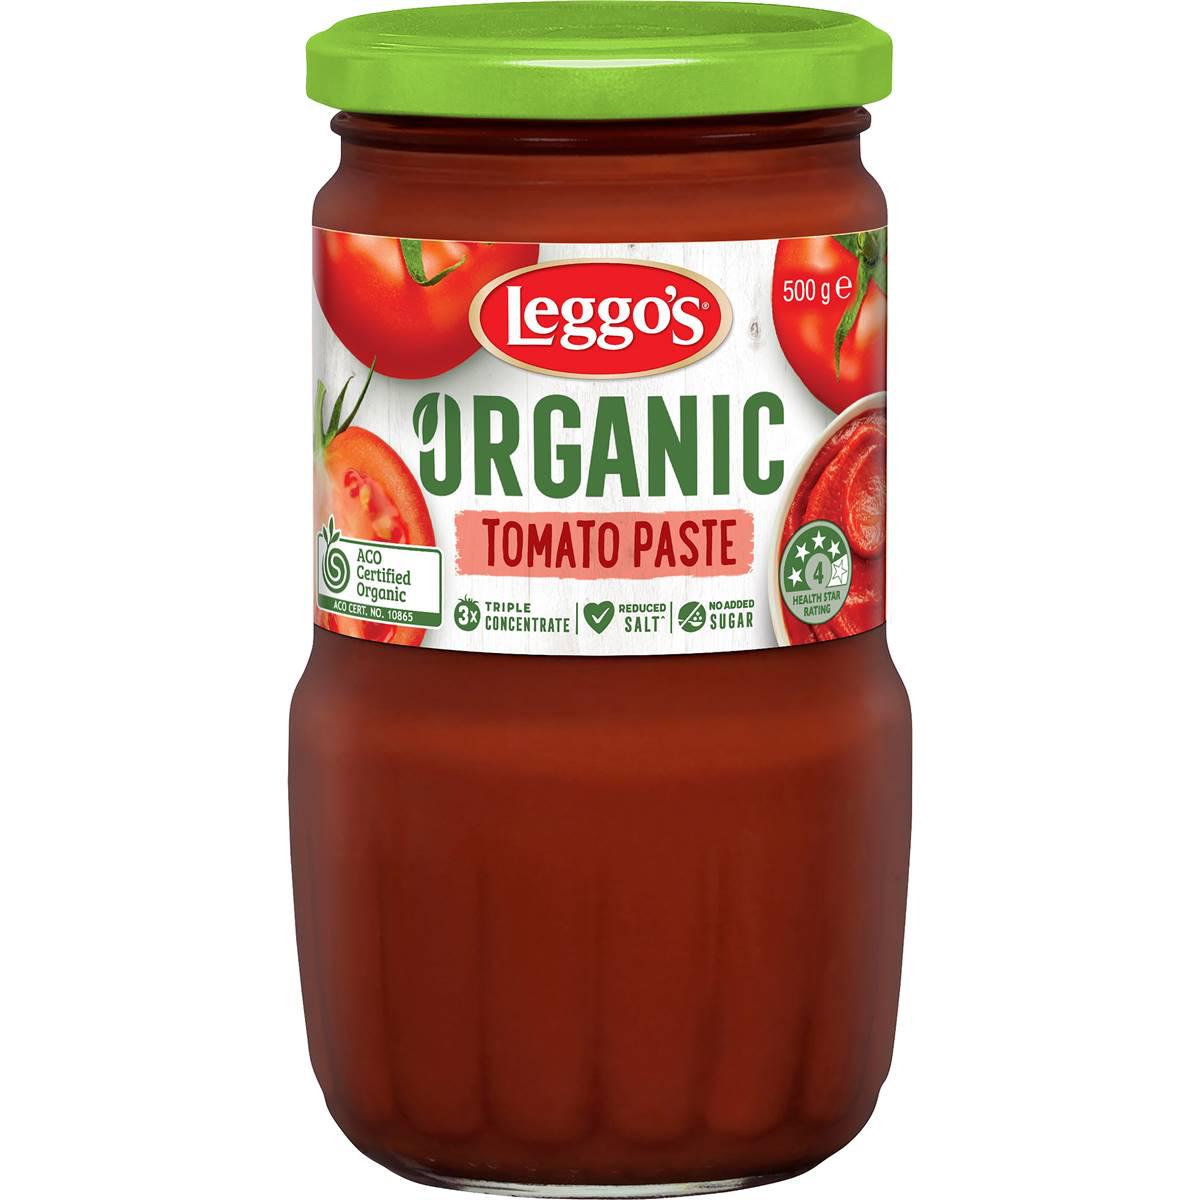 Leggos Organic Tomato Paste Concentrate 500g